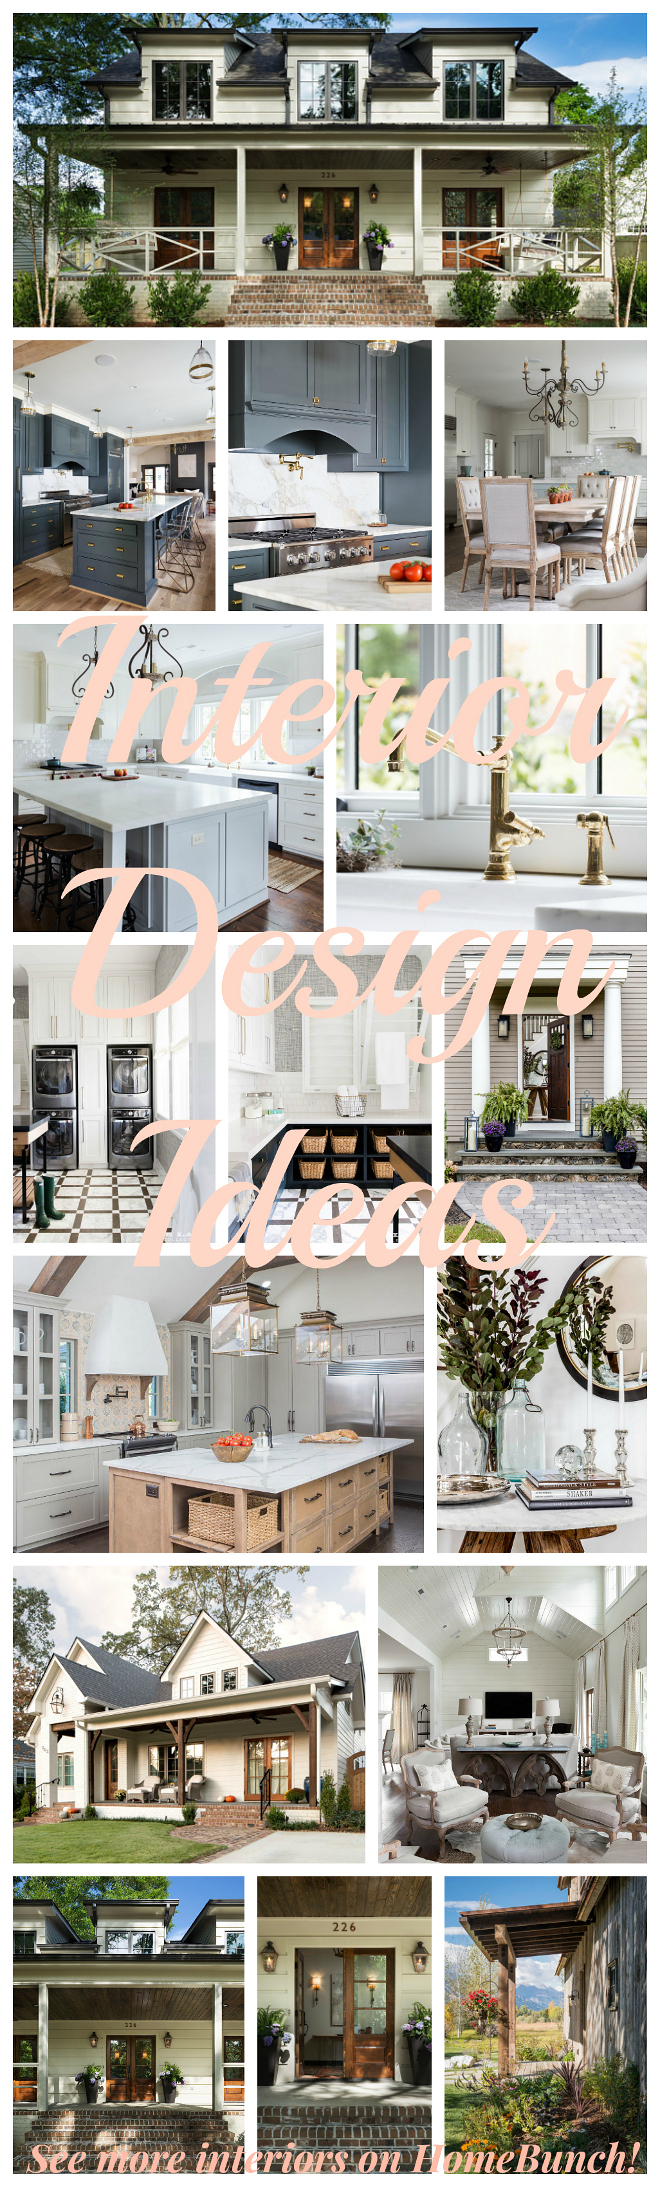 Interior Design Ideas. Home Bunch Blog weekly series showcasing the lastest interior design trends. Interior Design Ideas #InteriorDesign #InteriorDesignIdeas #blogs